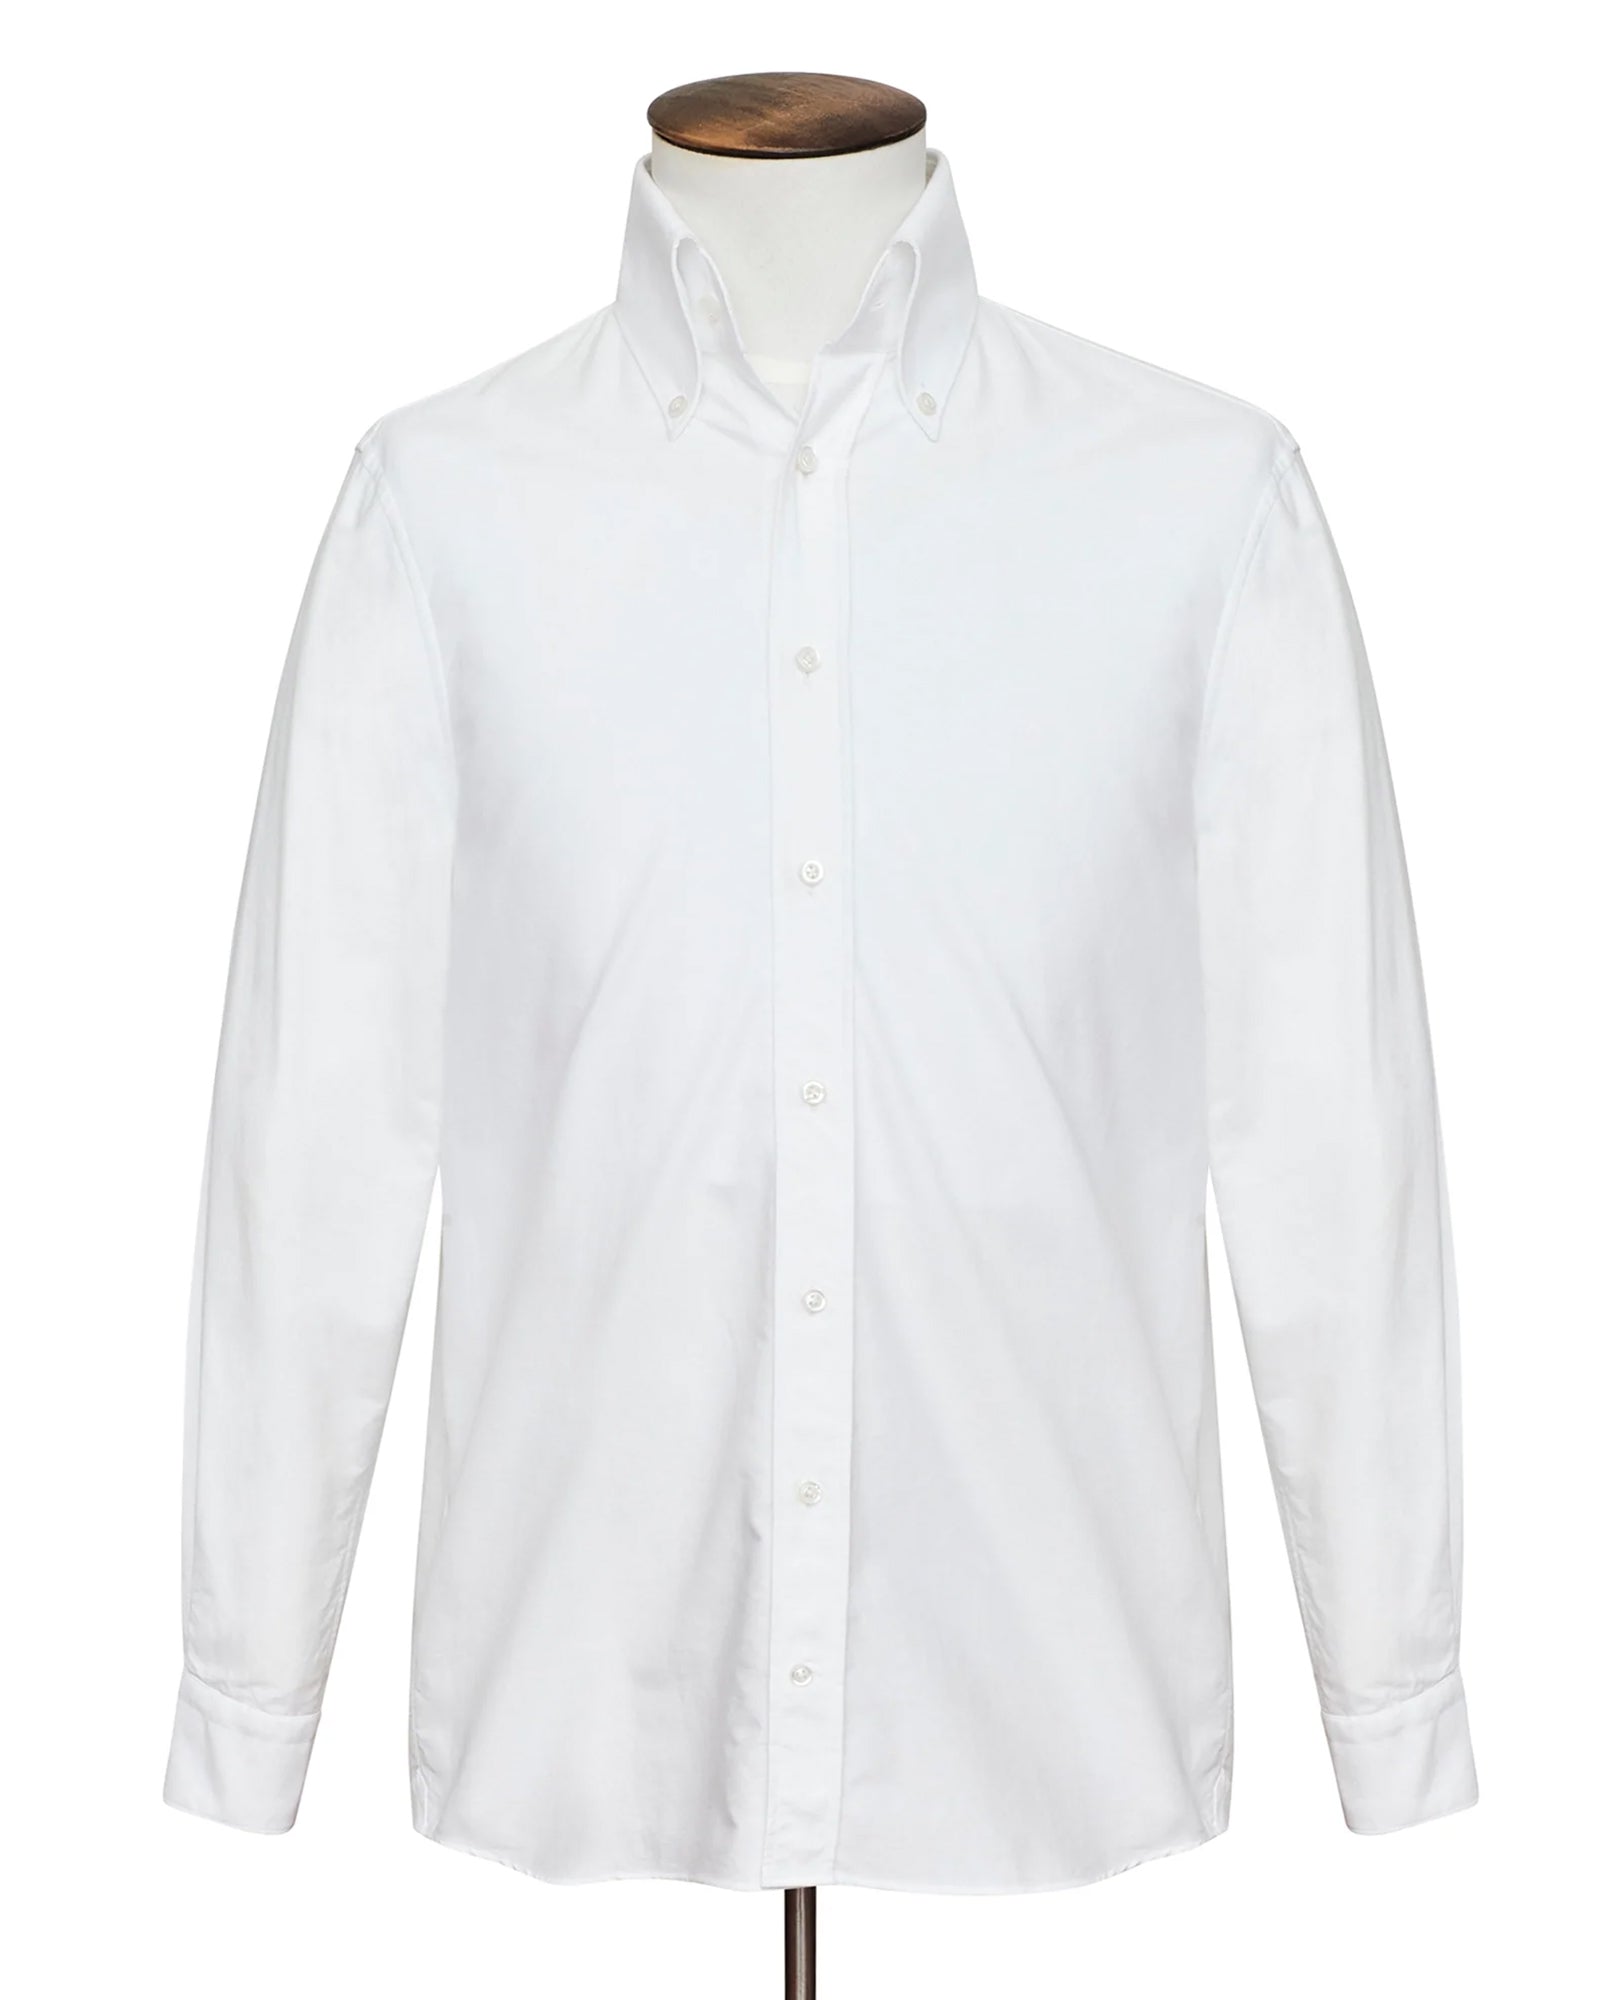 Classic White Oxford Button-Down Shirt